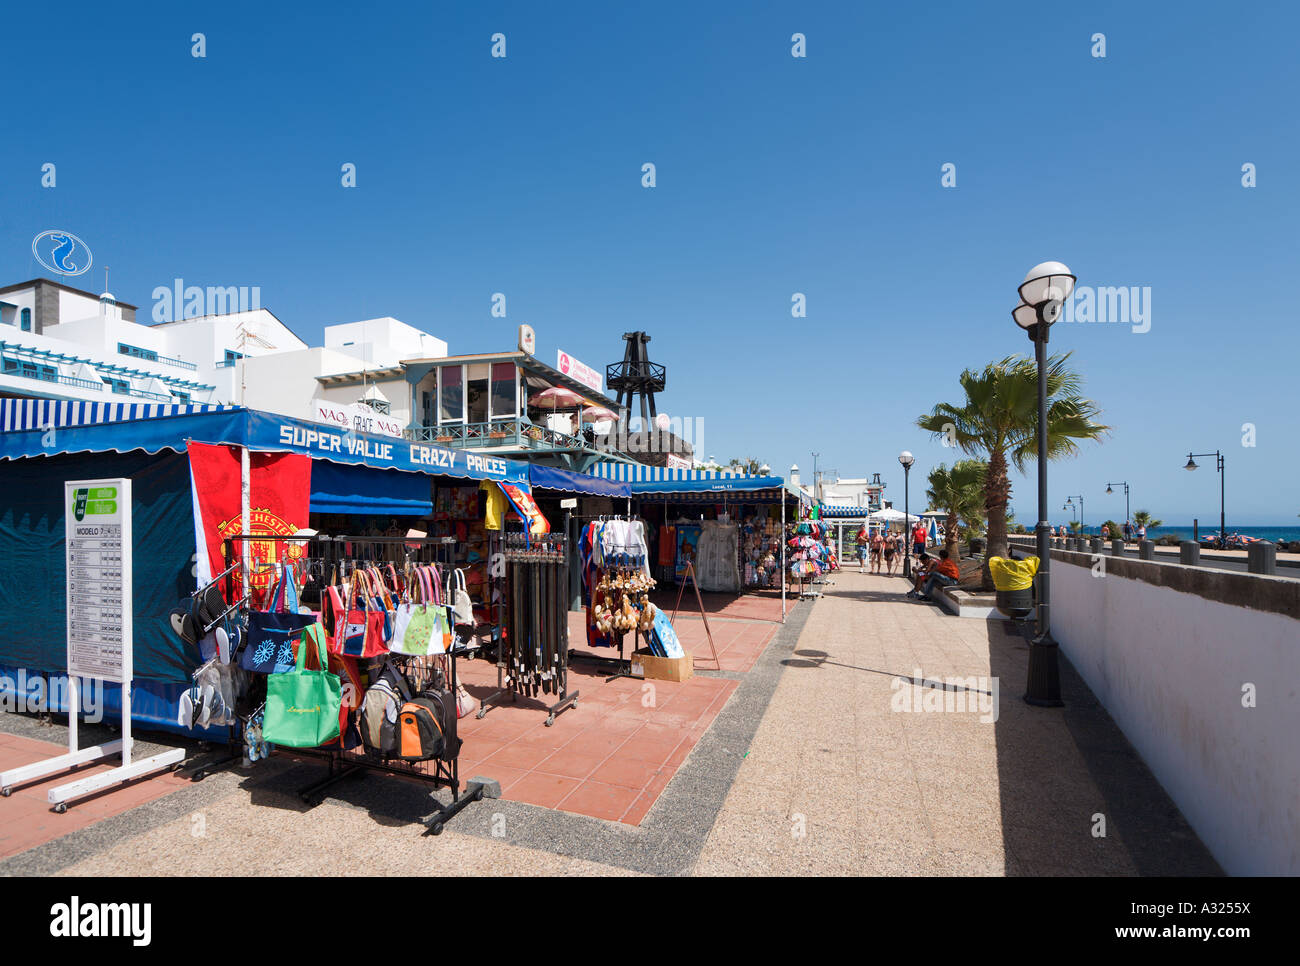 Boutiques dans le centre commercial, Jameos Playa de los Pocillos, Puerto del Carmen, Lanzarote, îles Canaries, Espagne Banque D'Images